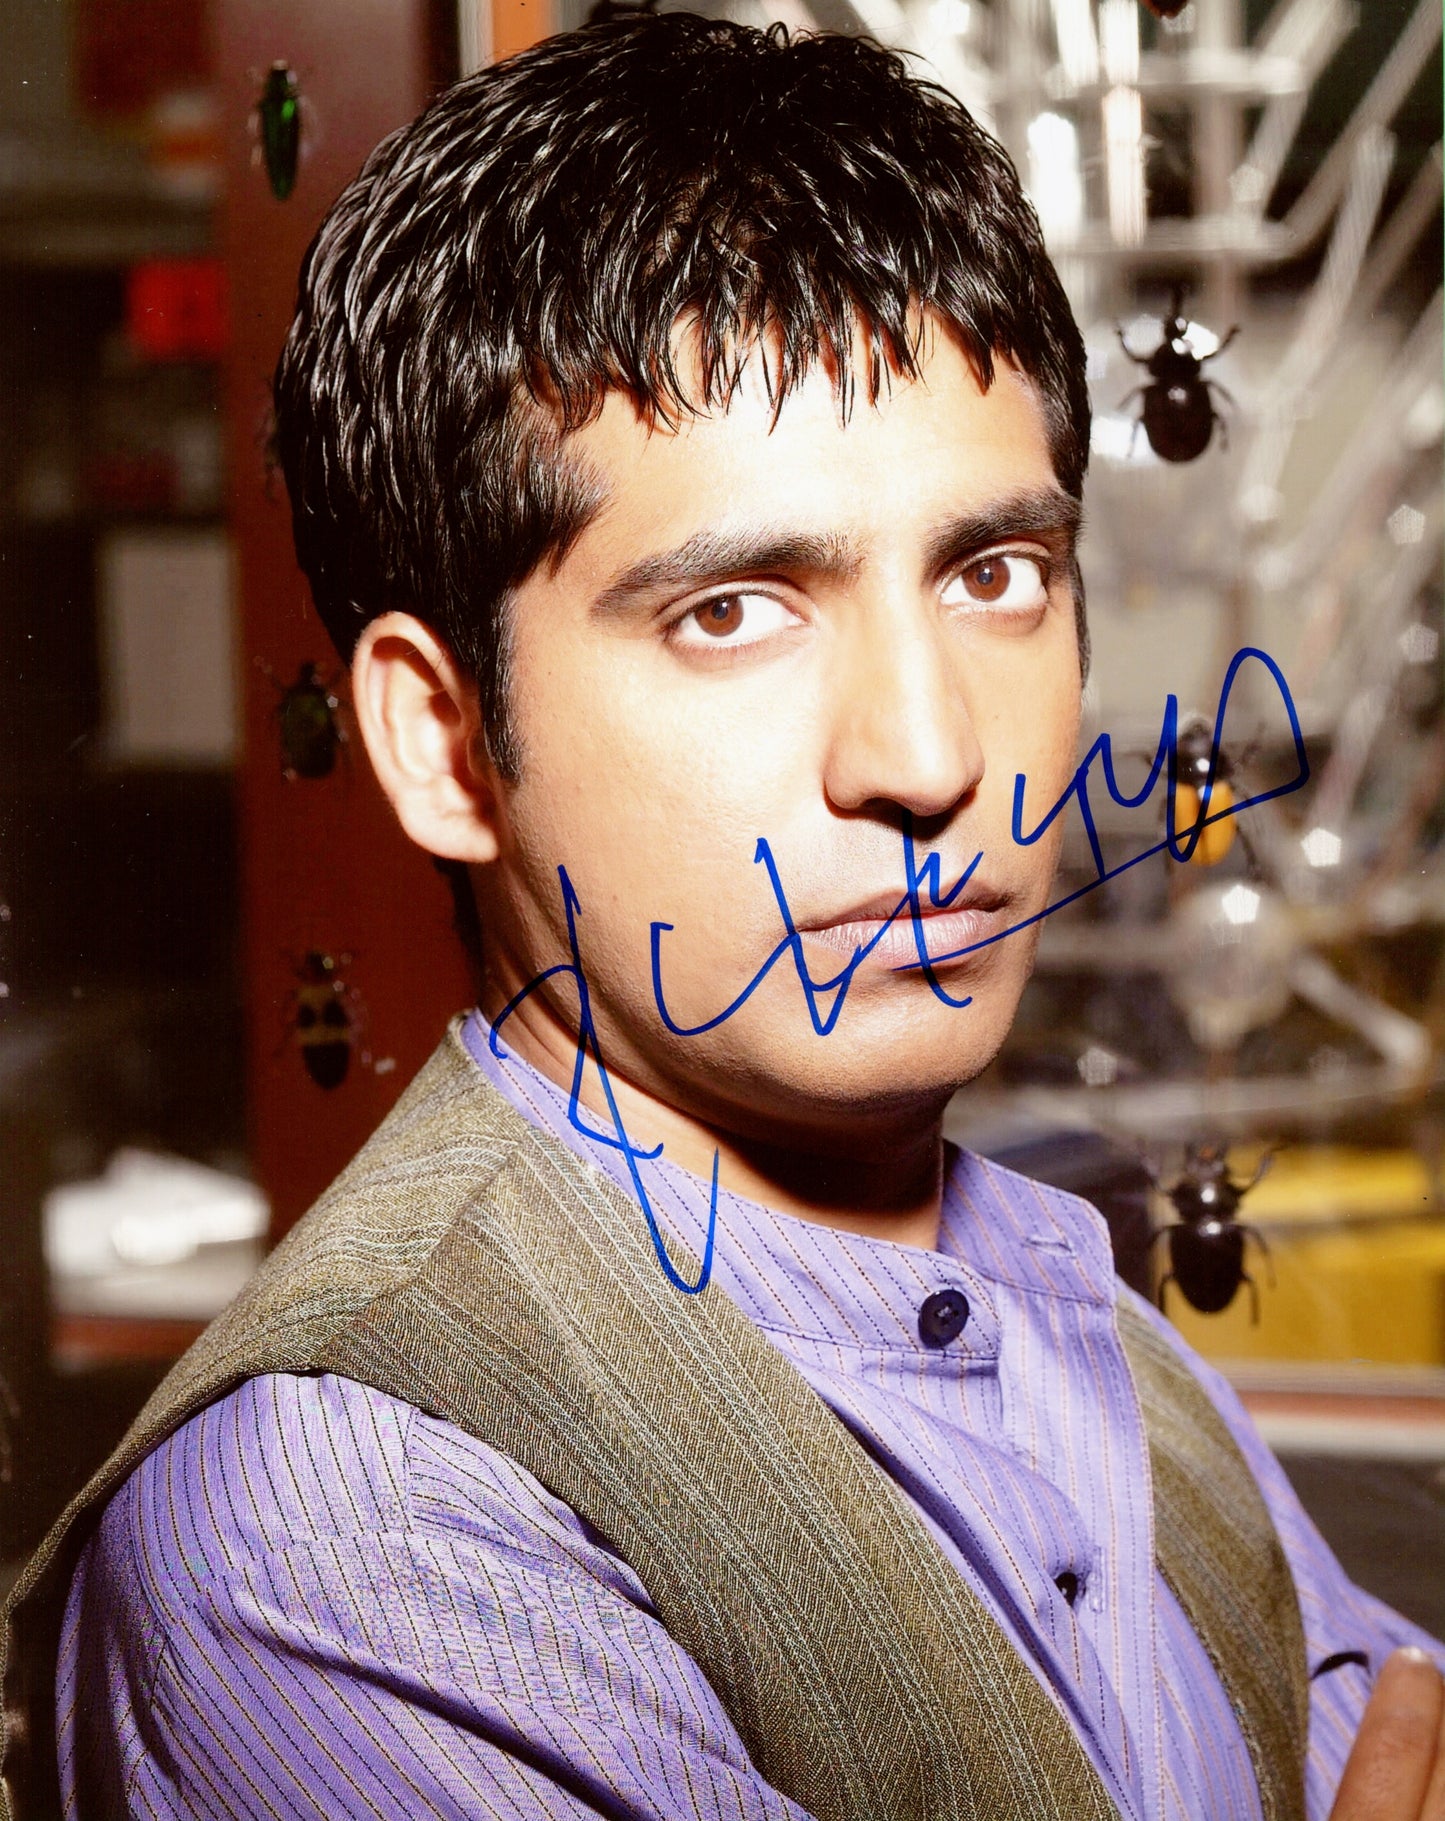 Ravi Kapoor Signed 8x10 Photo - Video Proof